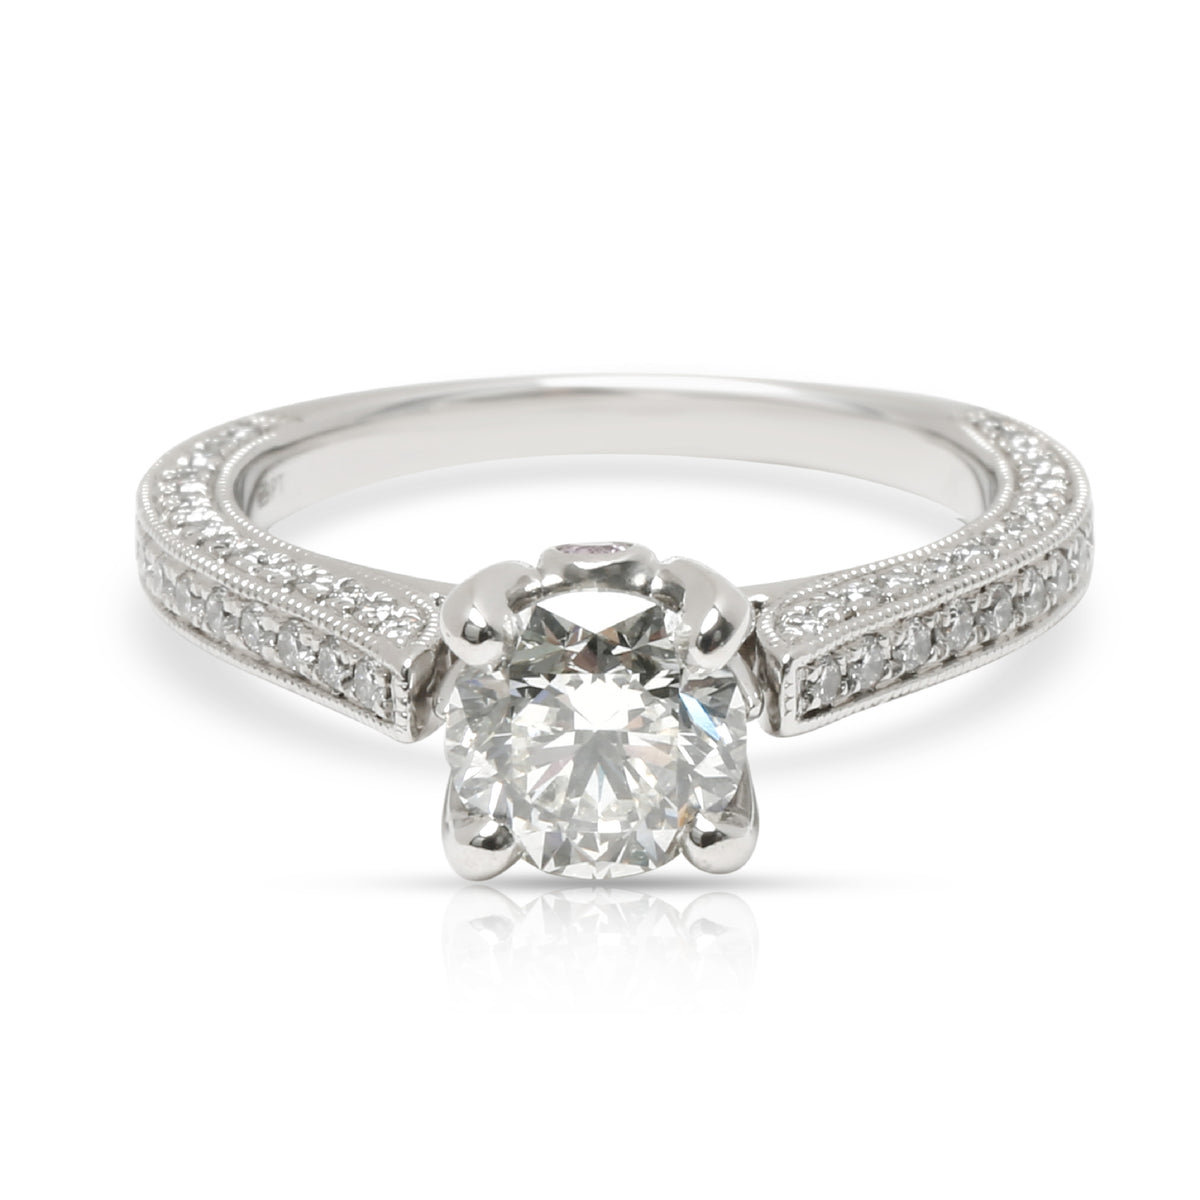 Blue Nile Monique Lhuillier Diamond Engagement Ring in  Platinum J VS2 1.43 ctw